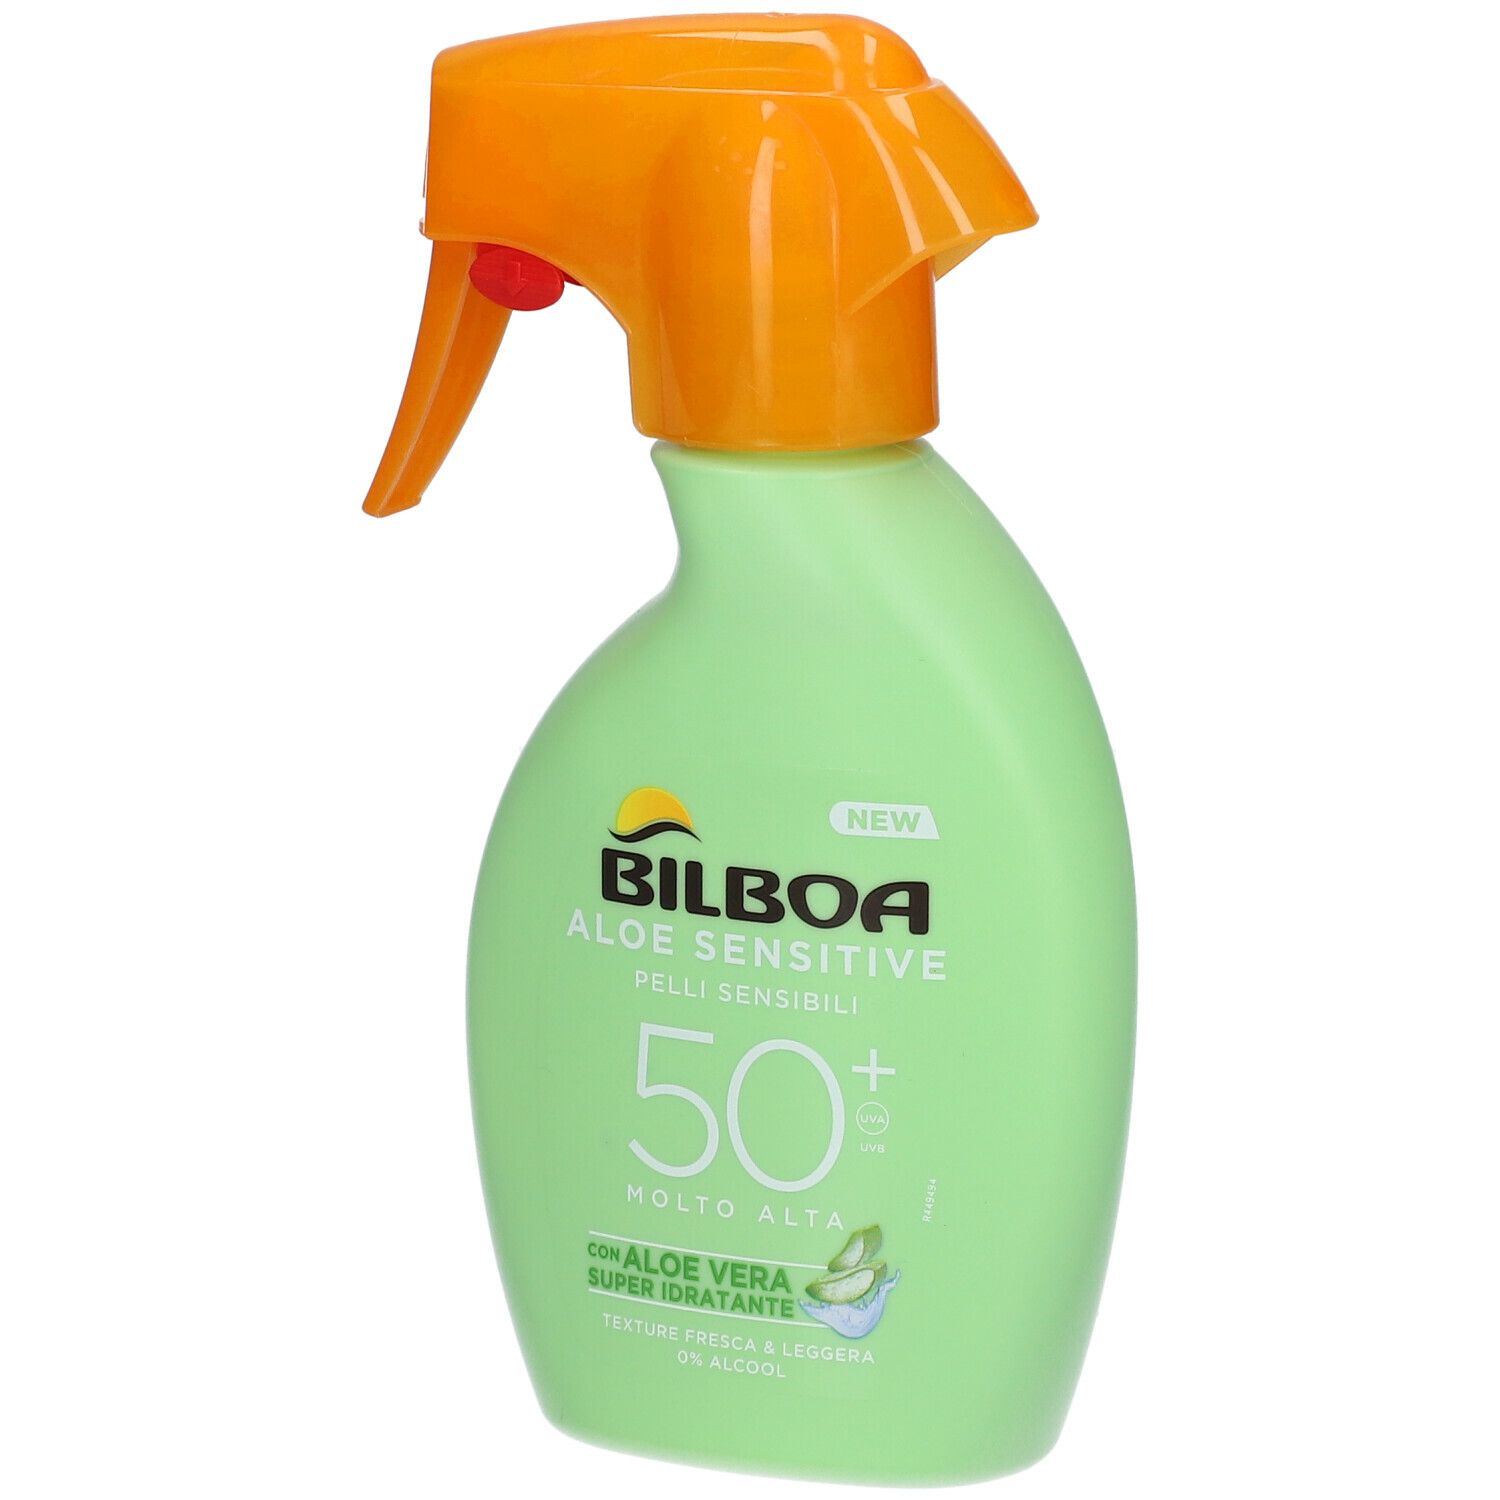 Bilboa Aloe Sensitive Pelli Sensibili 50+ Spray